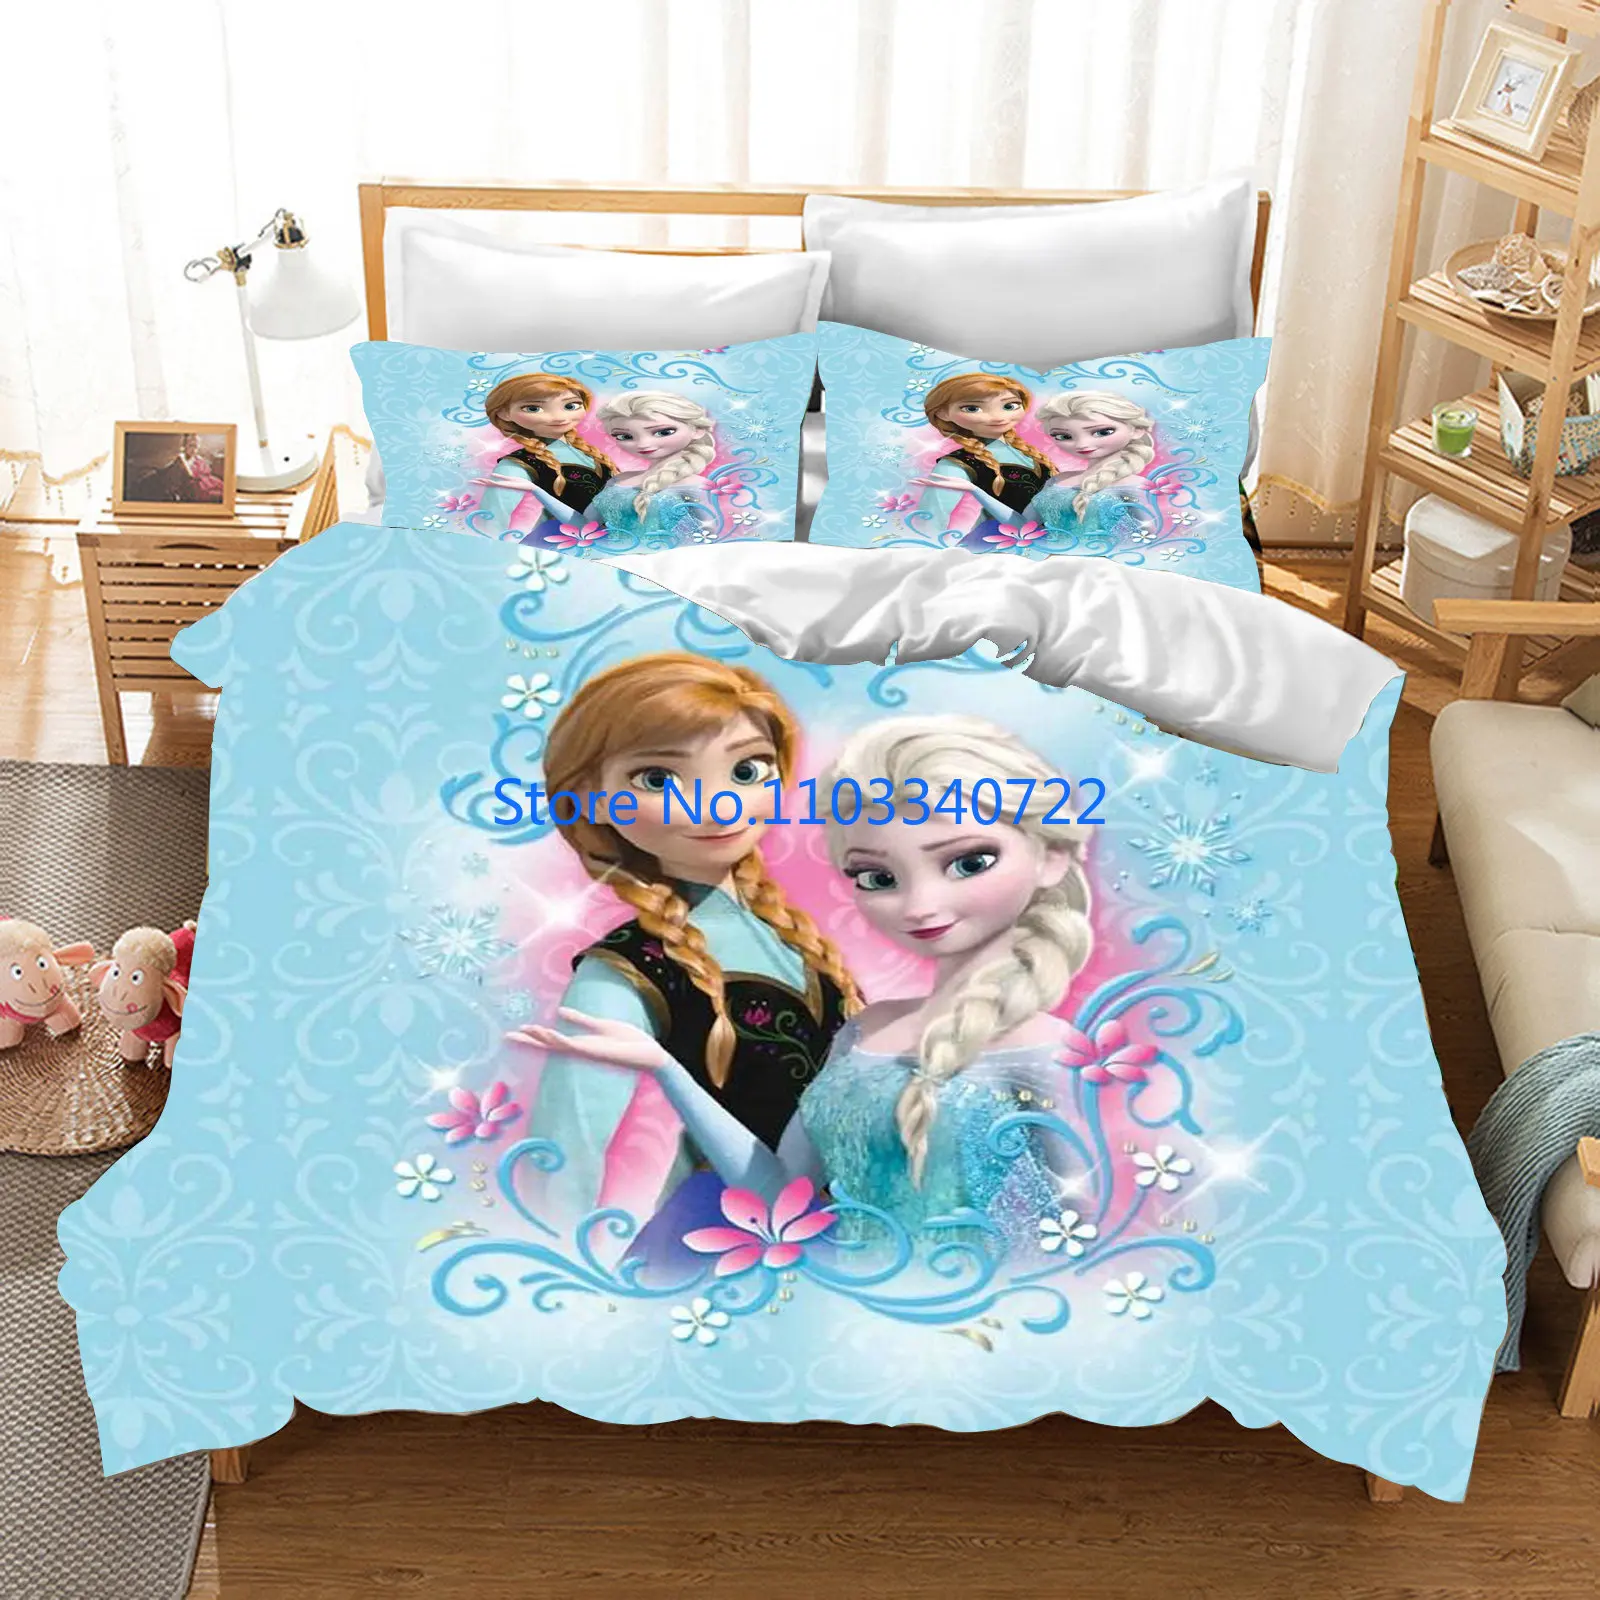 

Anime Frozen Queen Elsa Anna Kids Duvet Cover Set 3pcs 3D Print Comforter Cover Bedclothes for Girl Bedding Sets Bedroom Decor